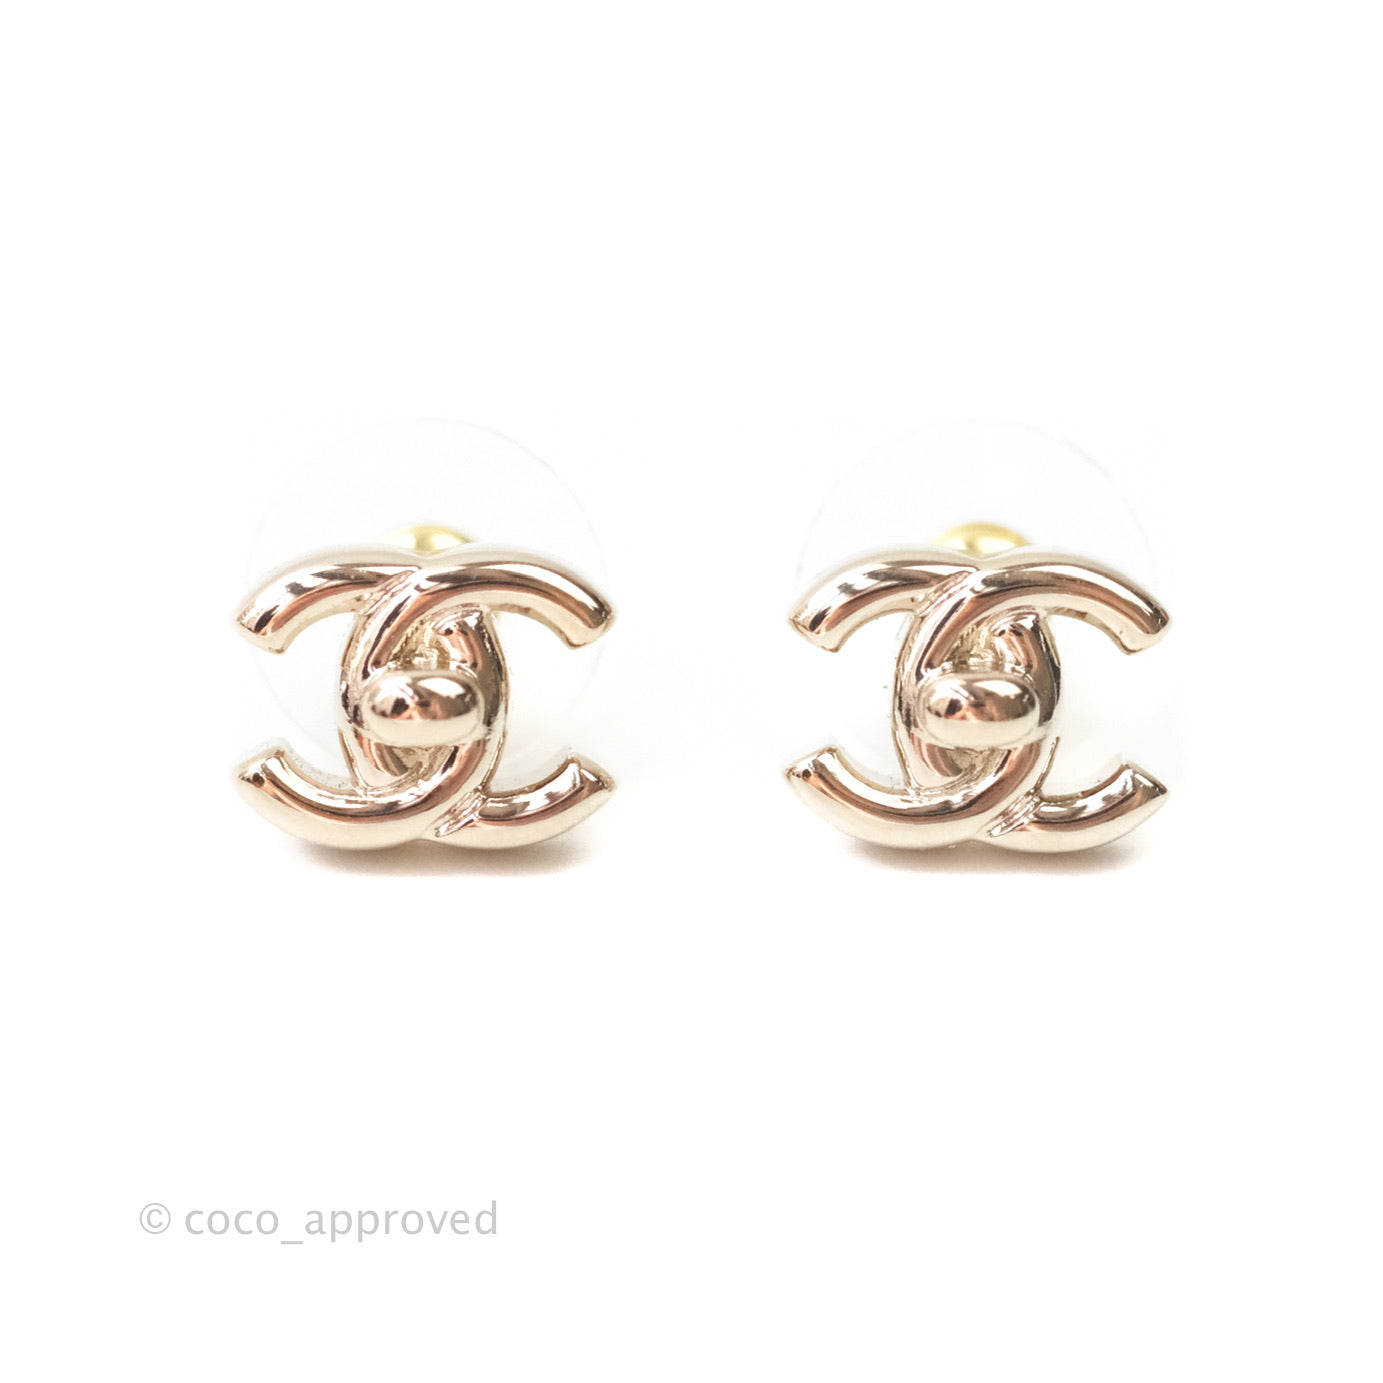 Chanel CC Turn Lock Mini Stud Earrings - Gold-Tone Metal Stud, Earrings -  CHA200915